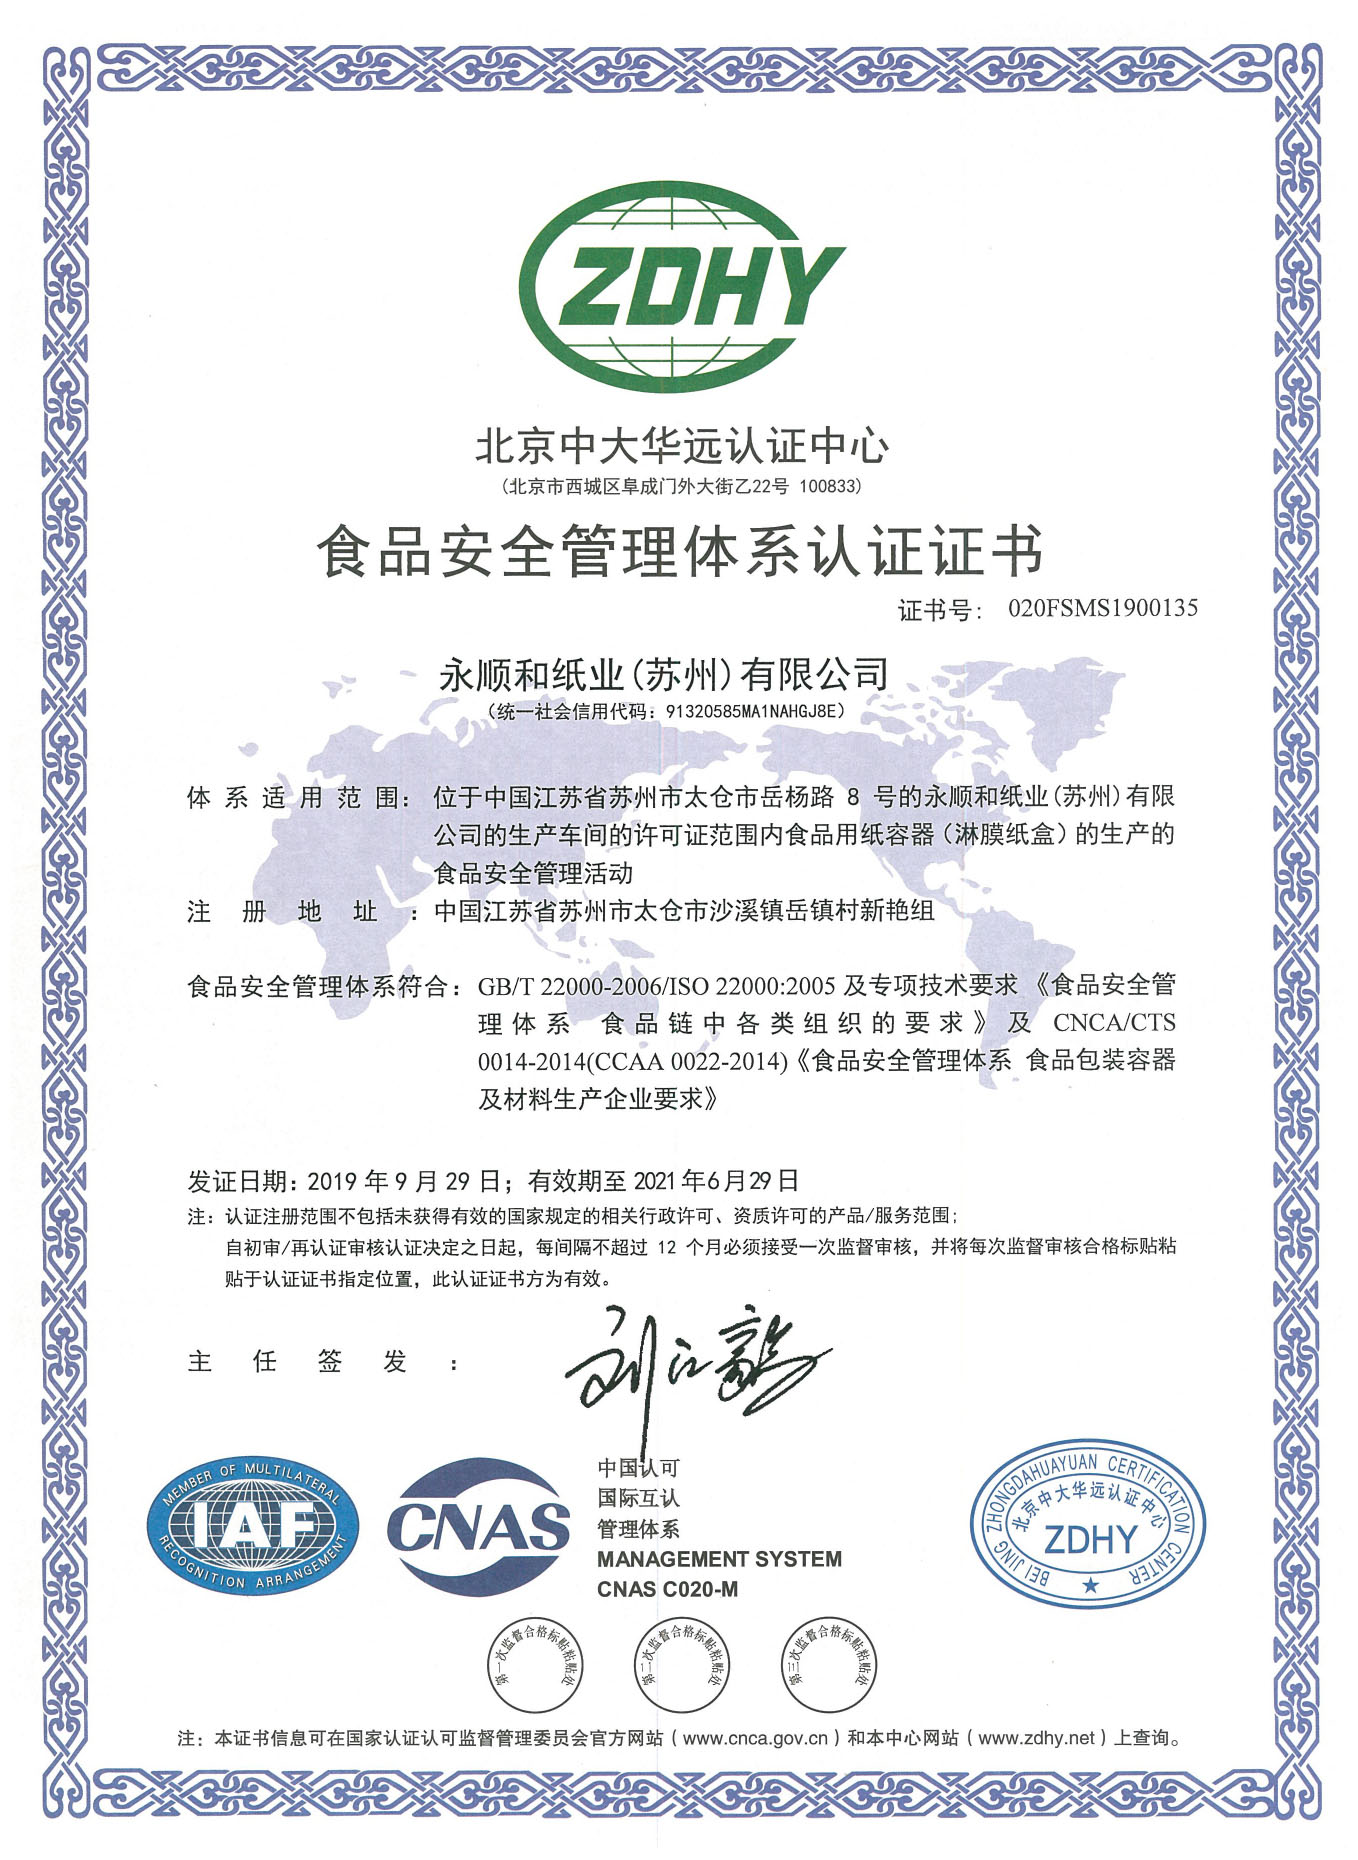 Certifications - Yostar Paper 